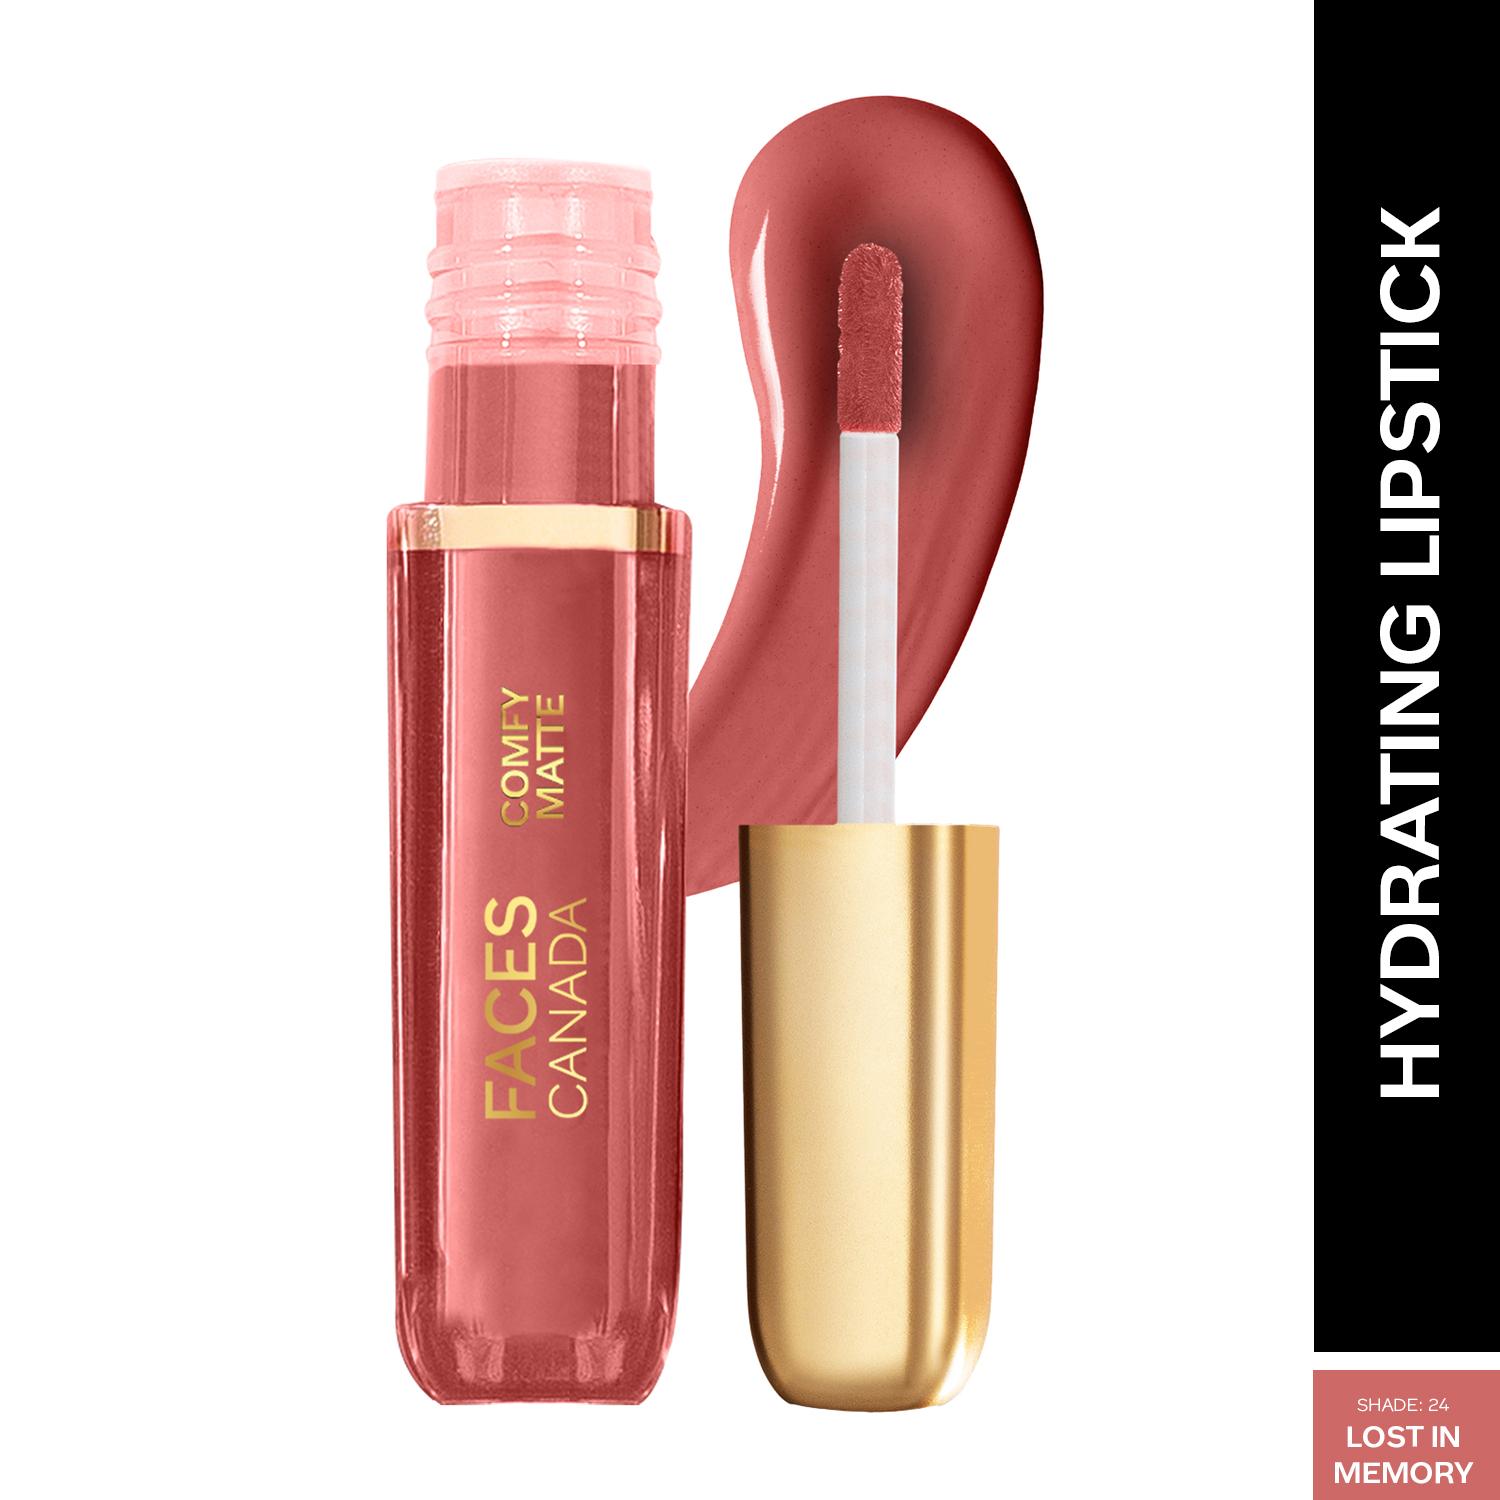 Faces Canada | Faces Canada Comfy Matte Liquid Lipstick, 10HR Stay, No Dryness - Lost In Memory 24 (3 ml)